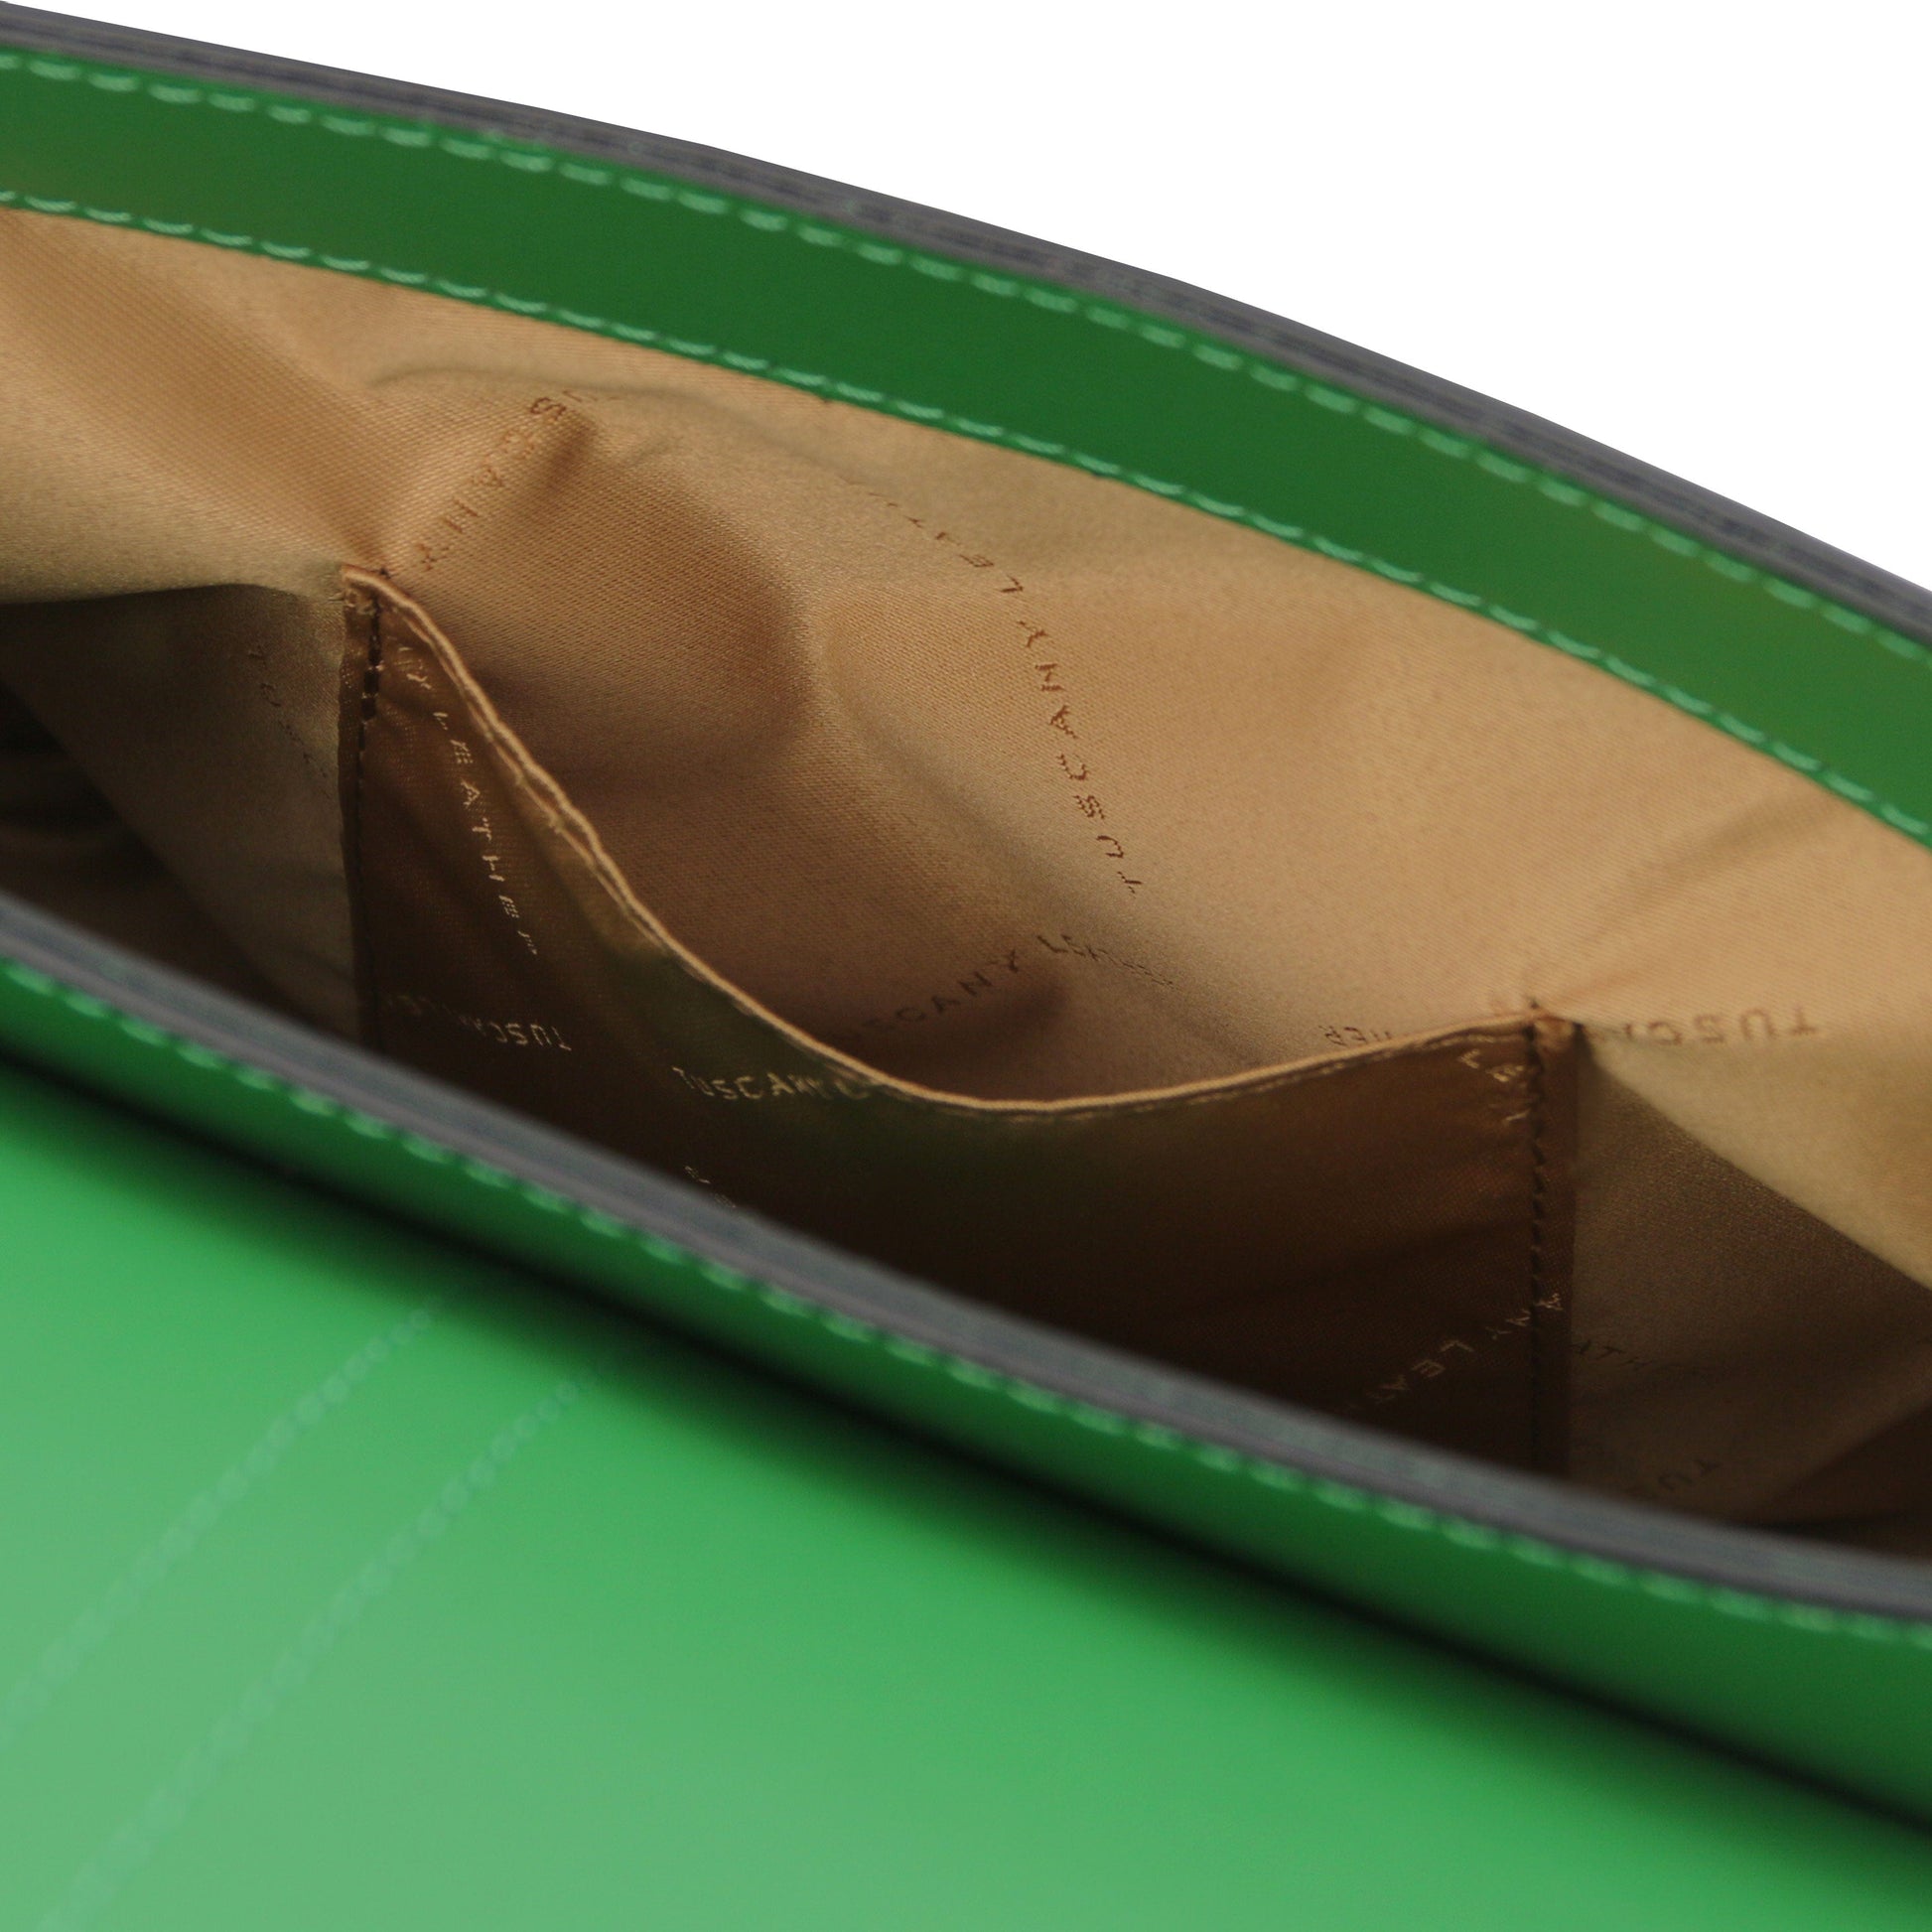 Nausica - Leather shoulder bag | TL141598 - Premium Leather shoulder bags - Just €121.90! Shop now at San Rocco Italia